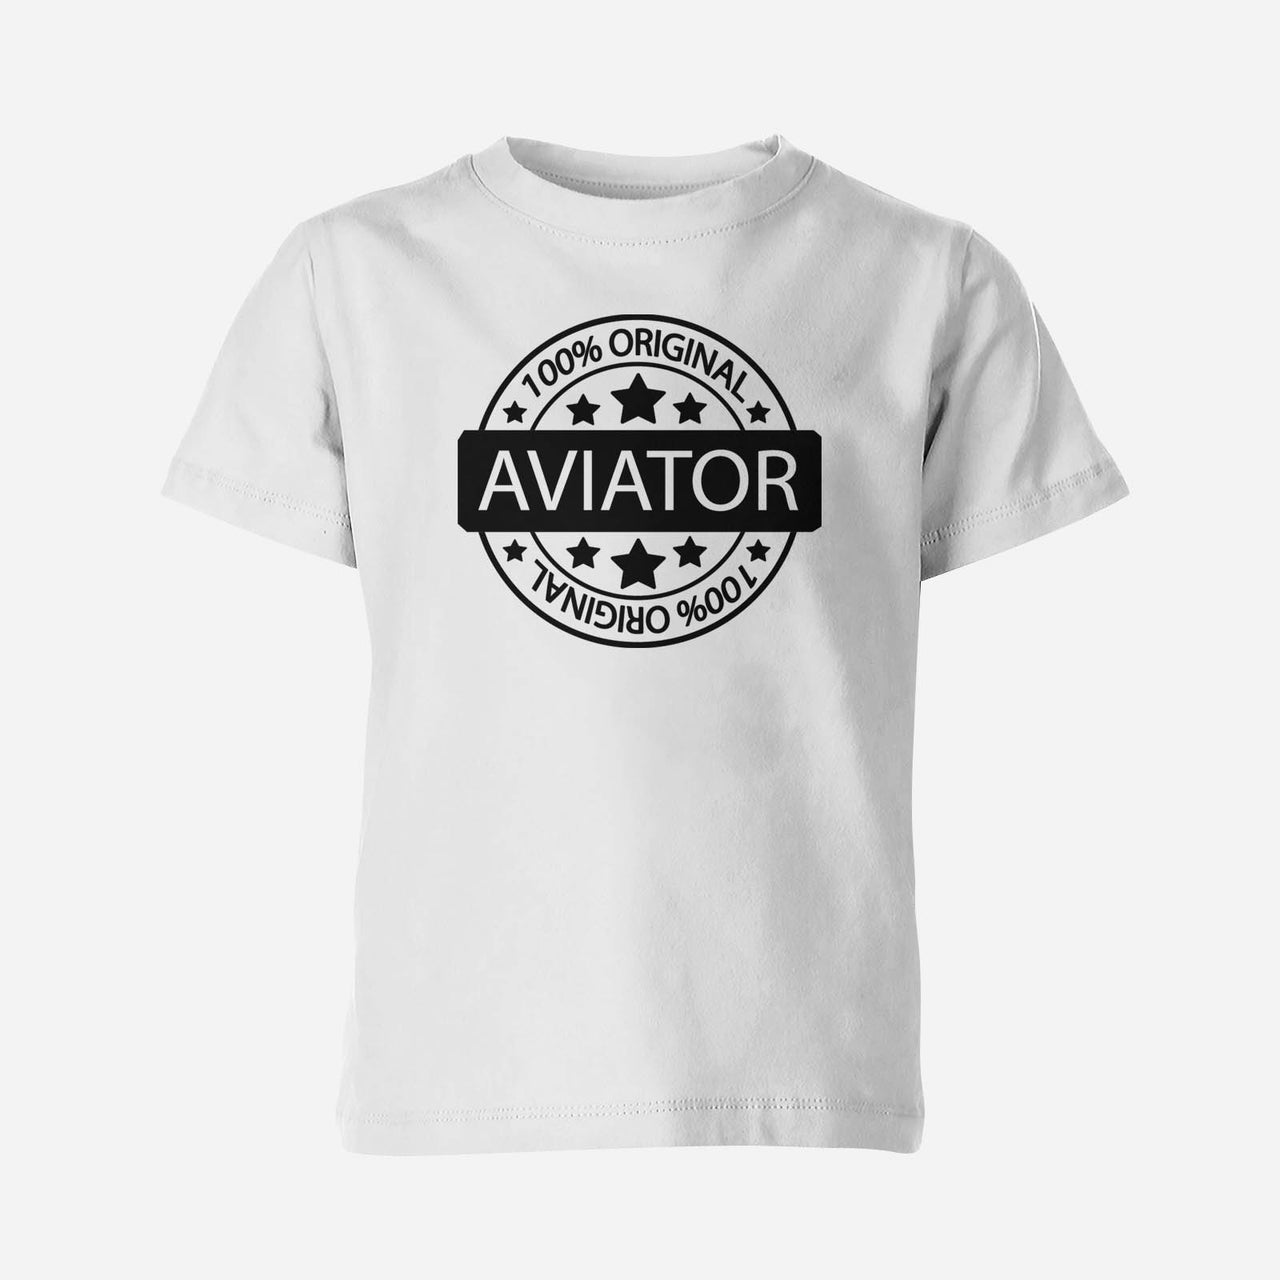 %100 Original Aviator Designed Children T-Shirts